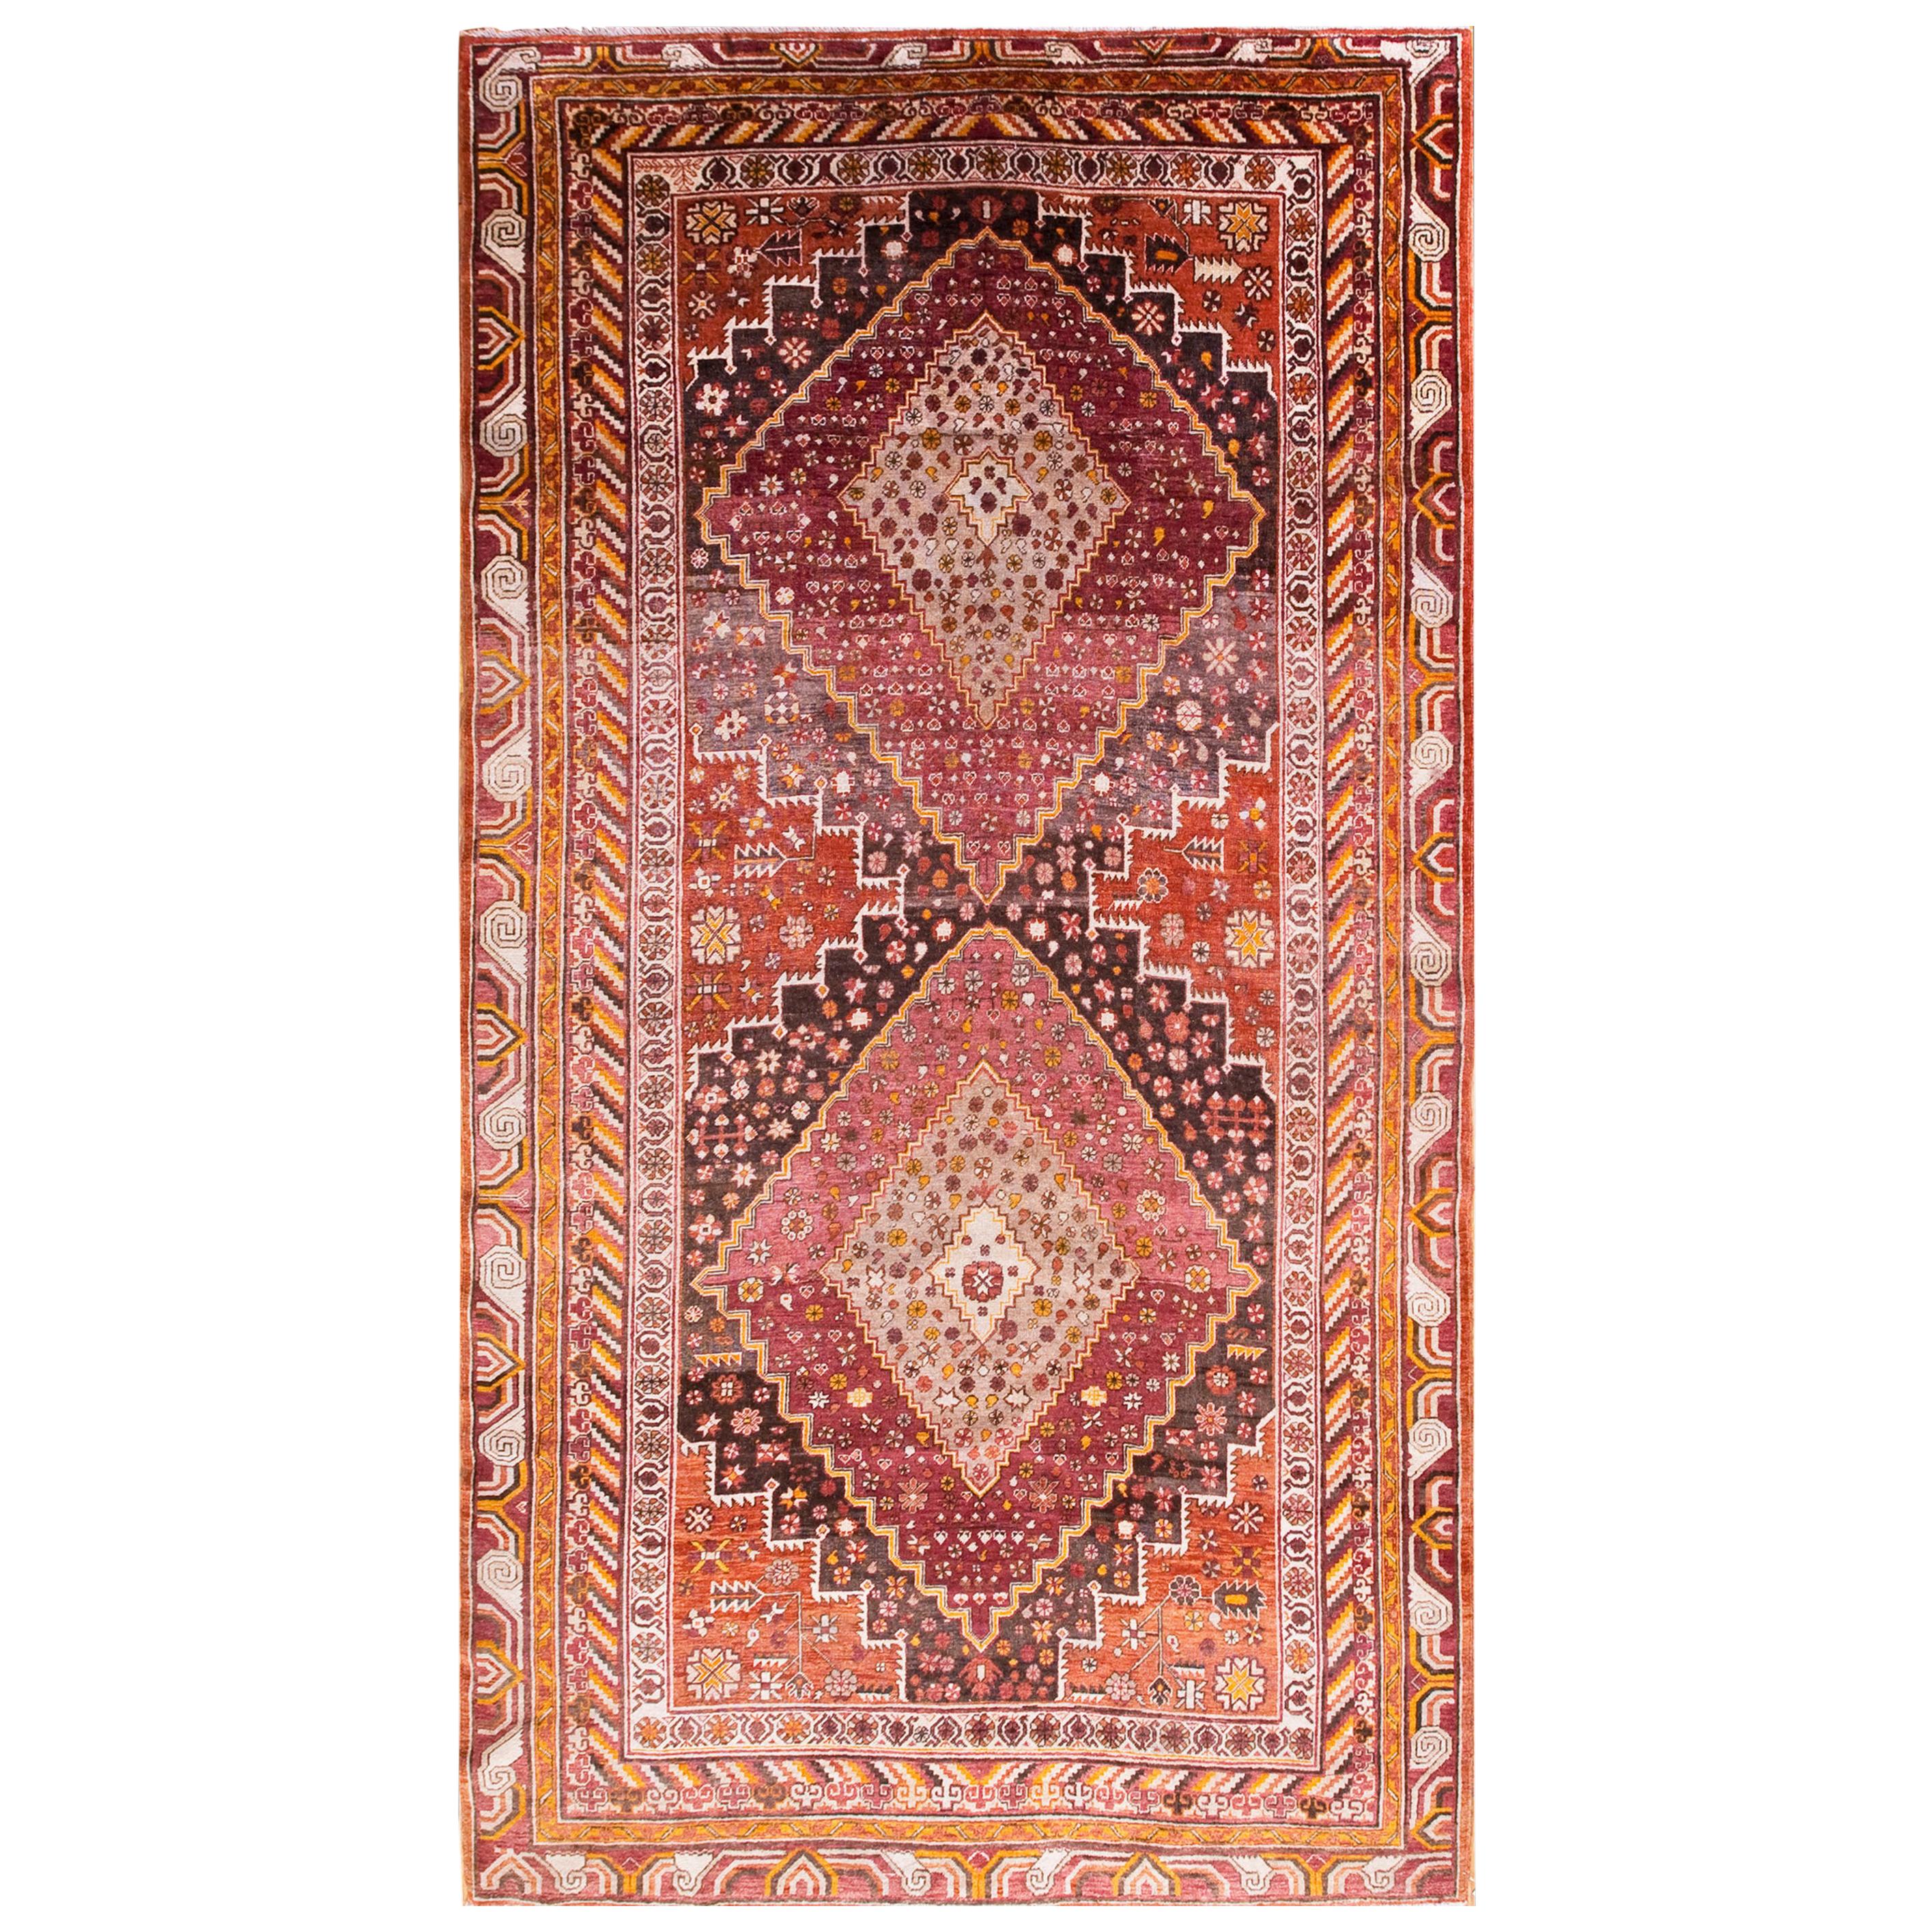 Early 20th Century Central Asian Khotan Carpet ( 7' x 13'4" - 213 x 406 )